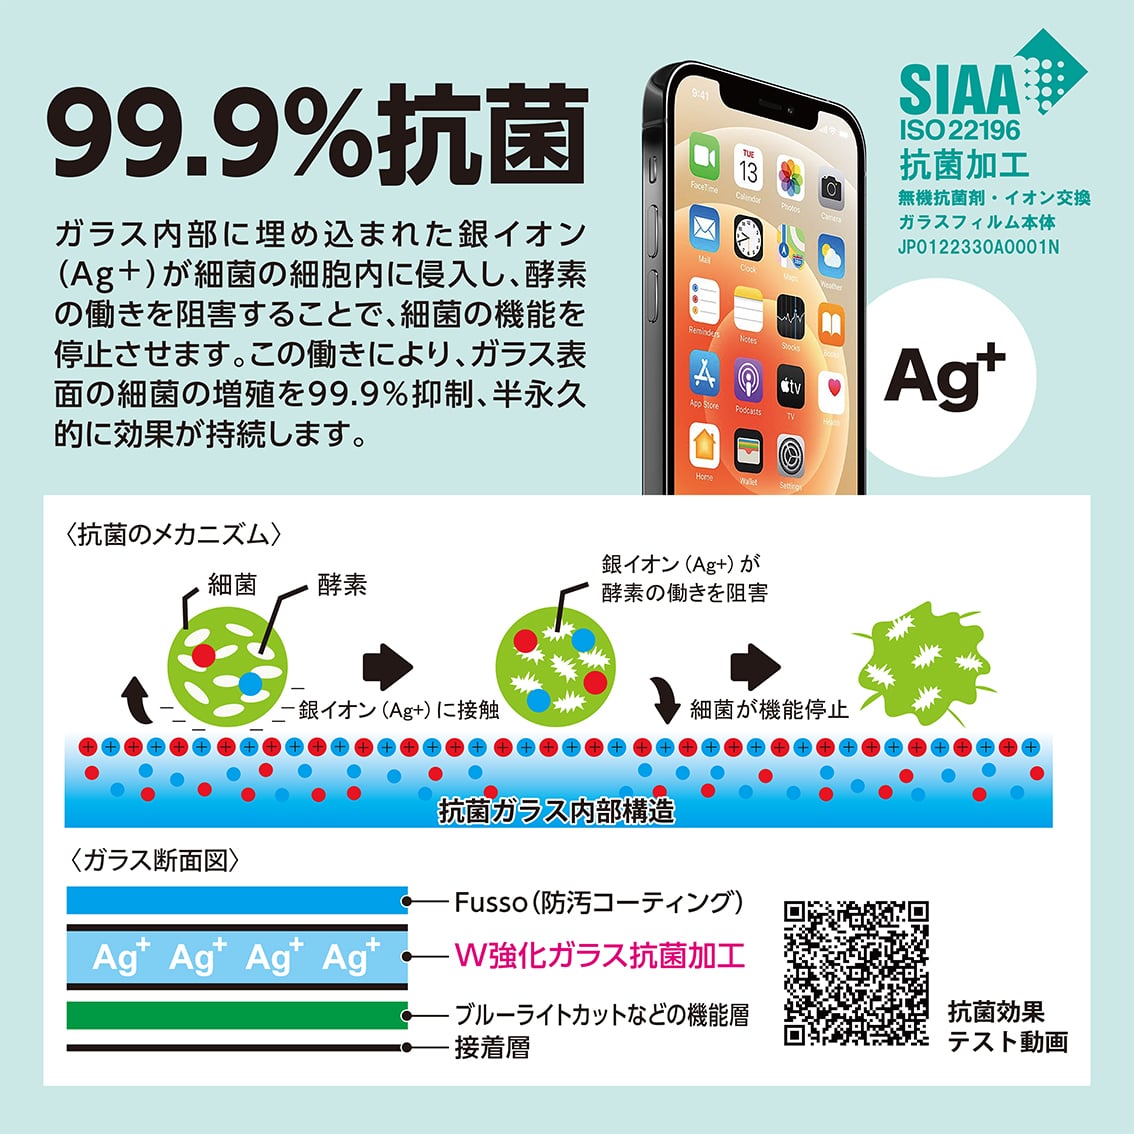 iPhone14 Pro 対応 抗菌耐衝撃ガラス 超薄 0.15mm for iPhone 2022年モデル 6.1inch （3レンズ）